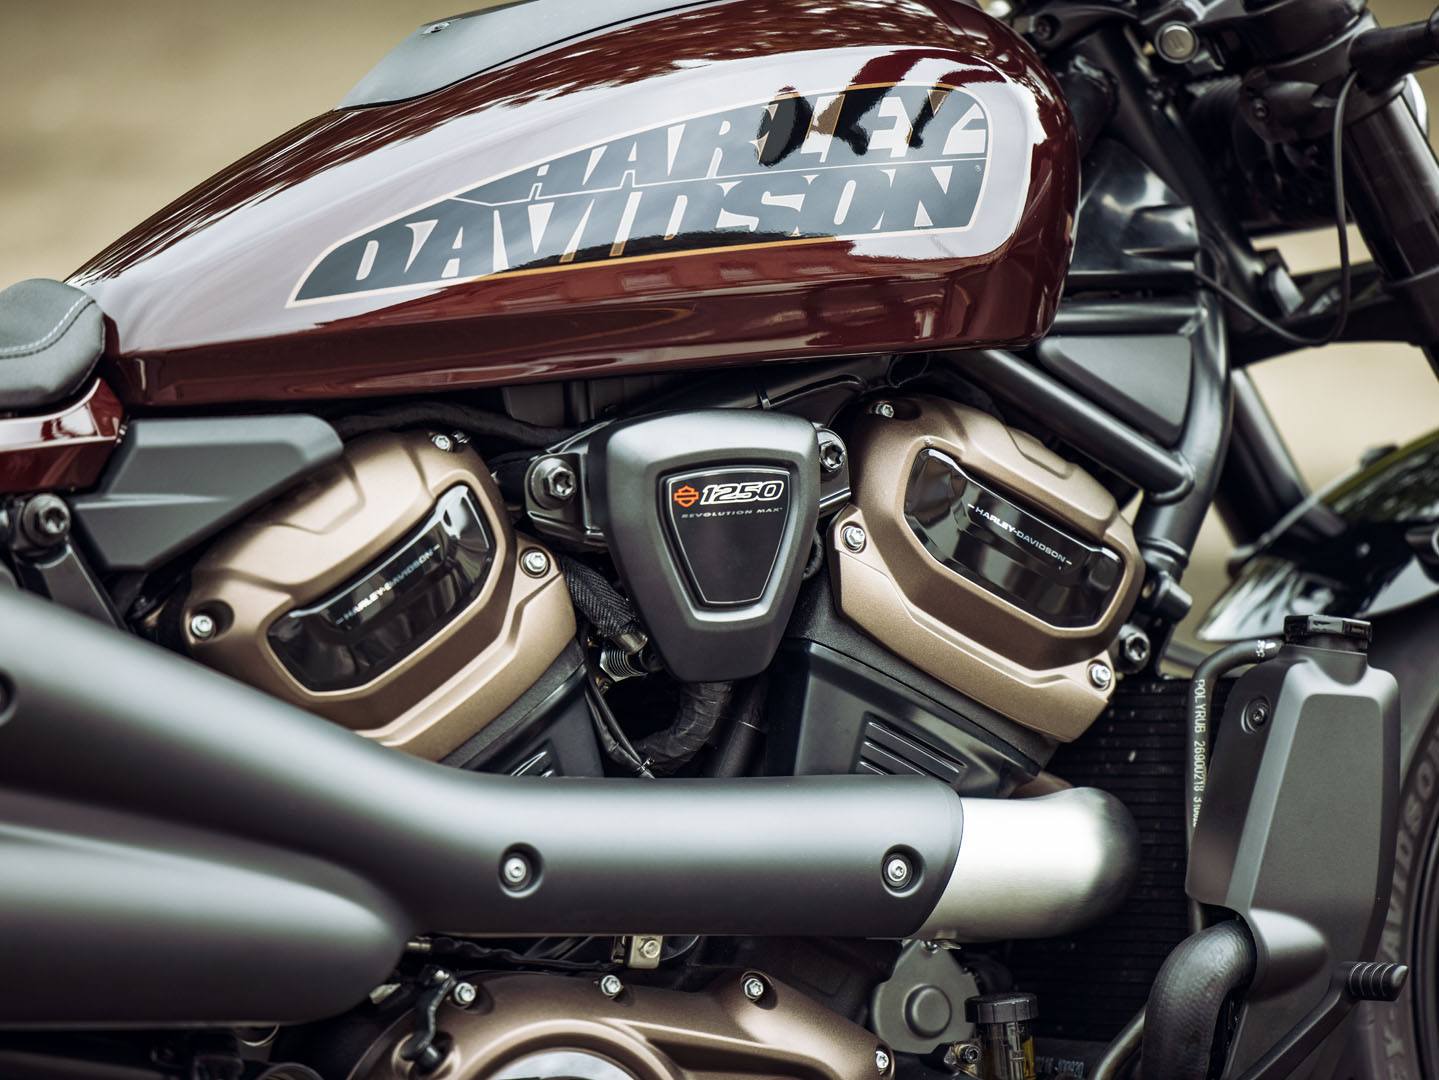 2021 Harley-Davidson Sportster® S in Ames, Iowa - Photo 5